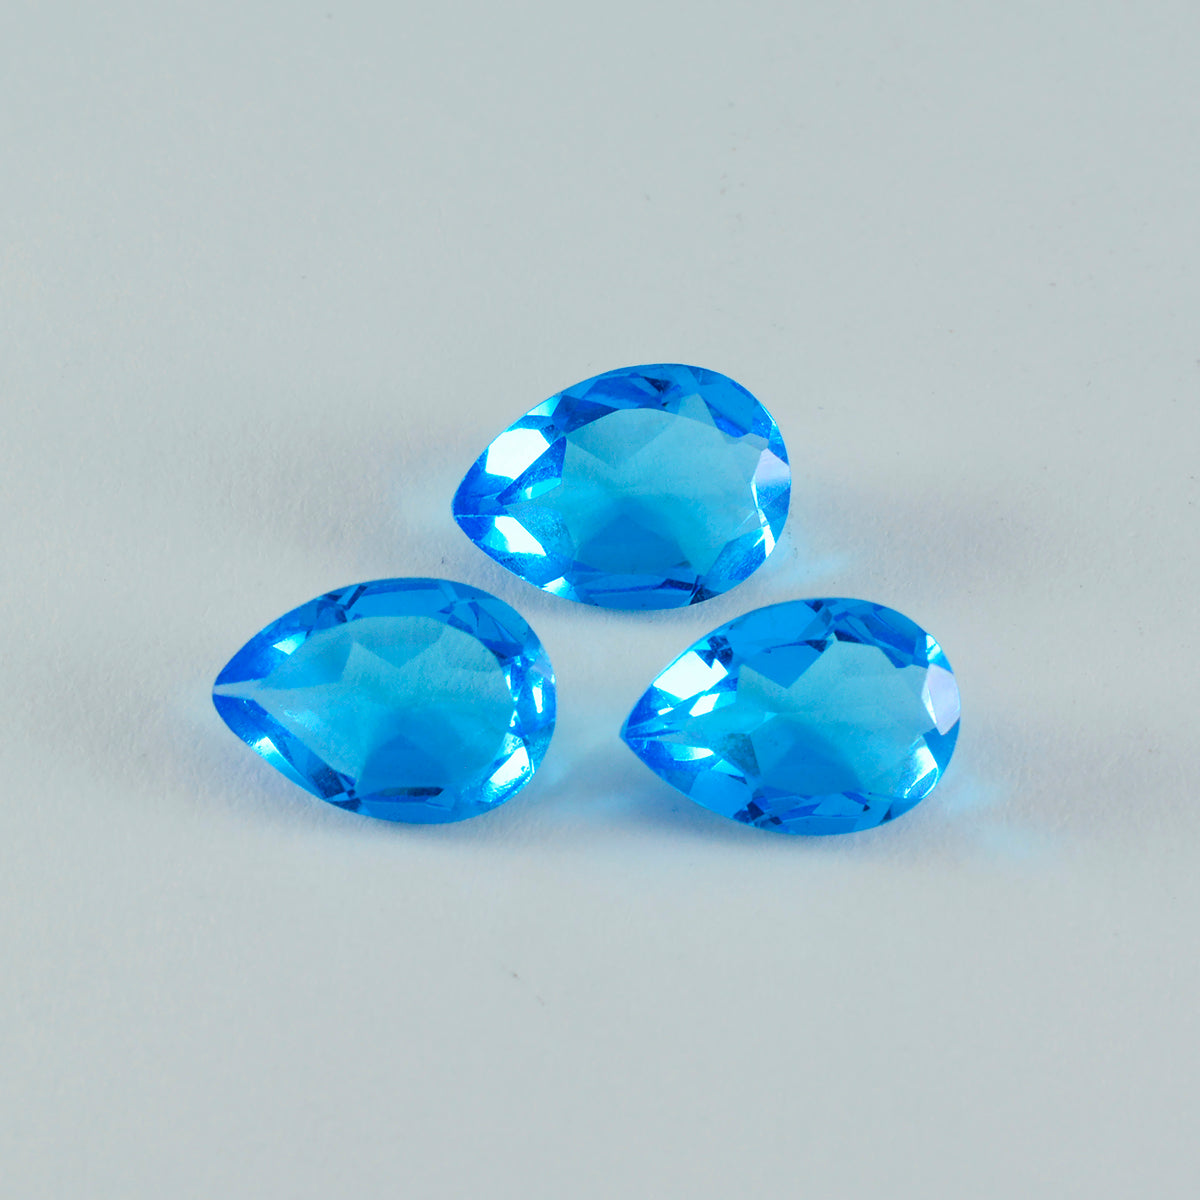 Riyogems 1PC Blue Topaz CZ Faceted 12x16 mm Pear Shape startling Quality Gem